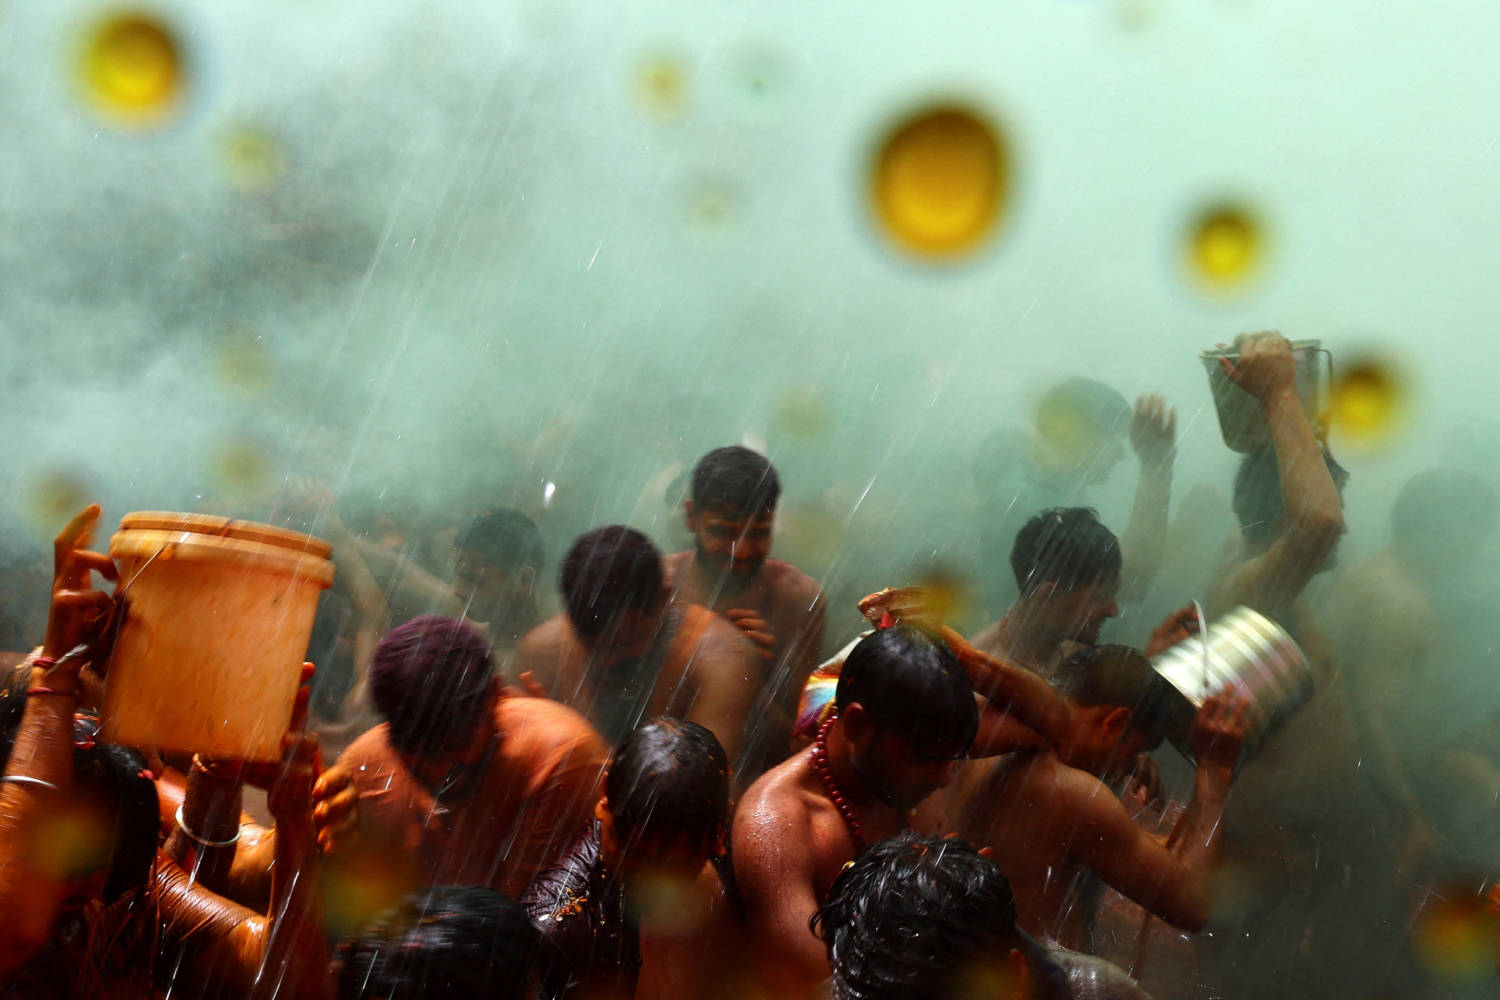 Huranga, A Game Played Between Men And Women A Day After Holi, At Dauji Temple In Mathura